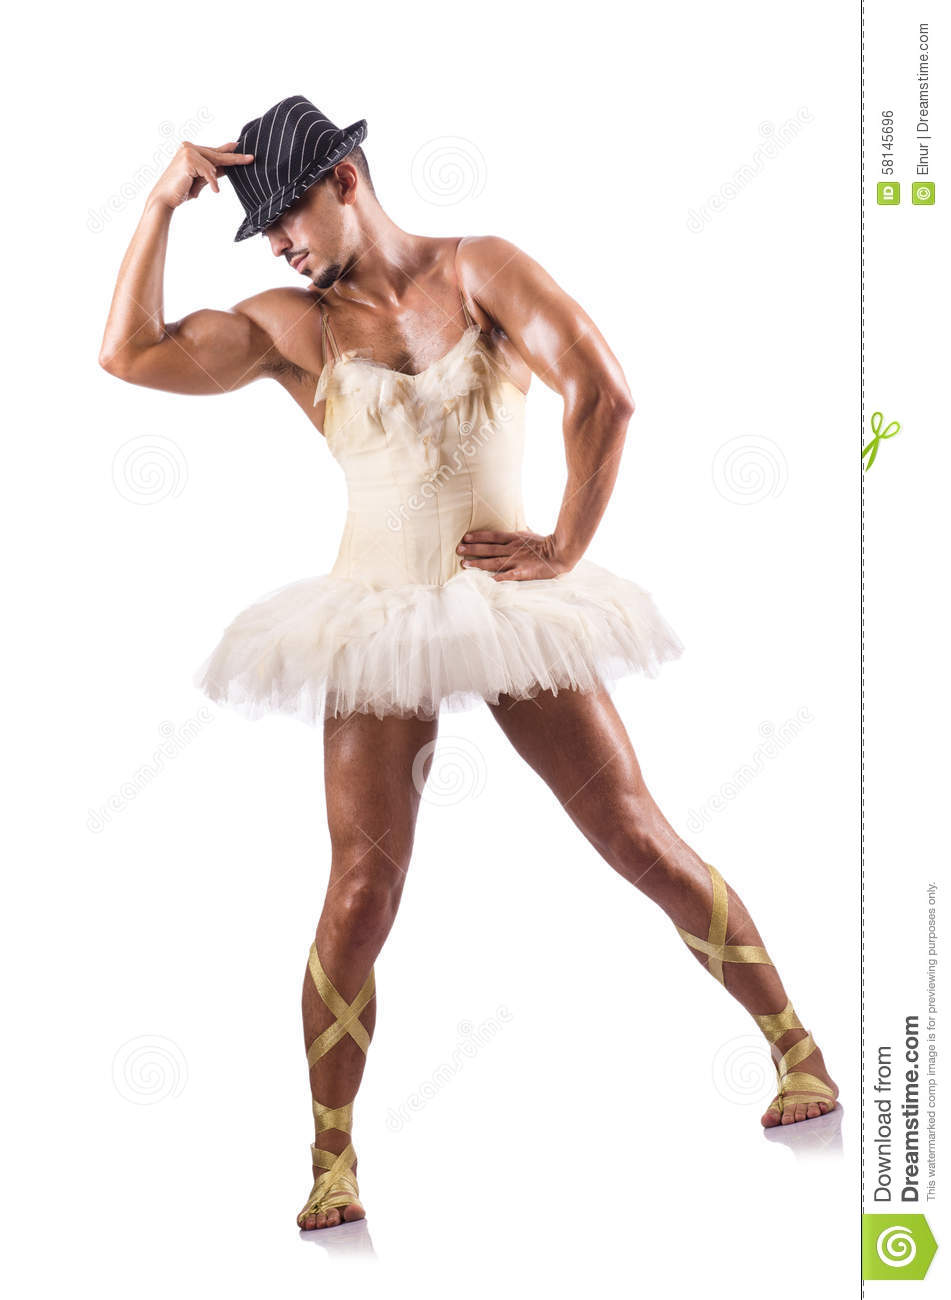 The Man In Tutu Performing Ballet Dance 